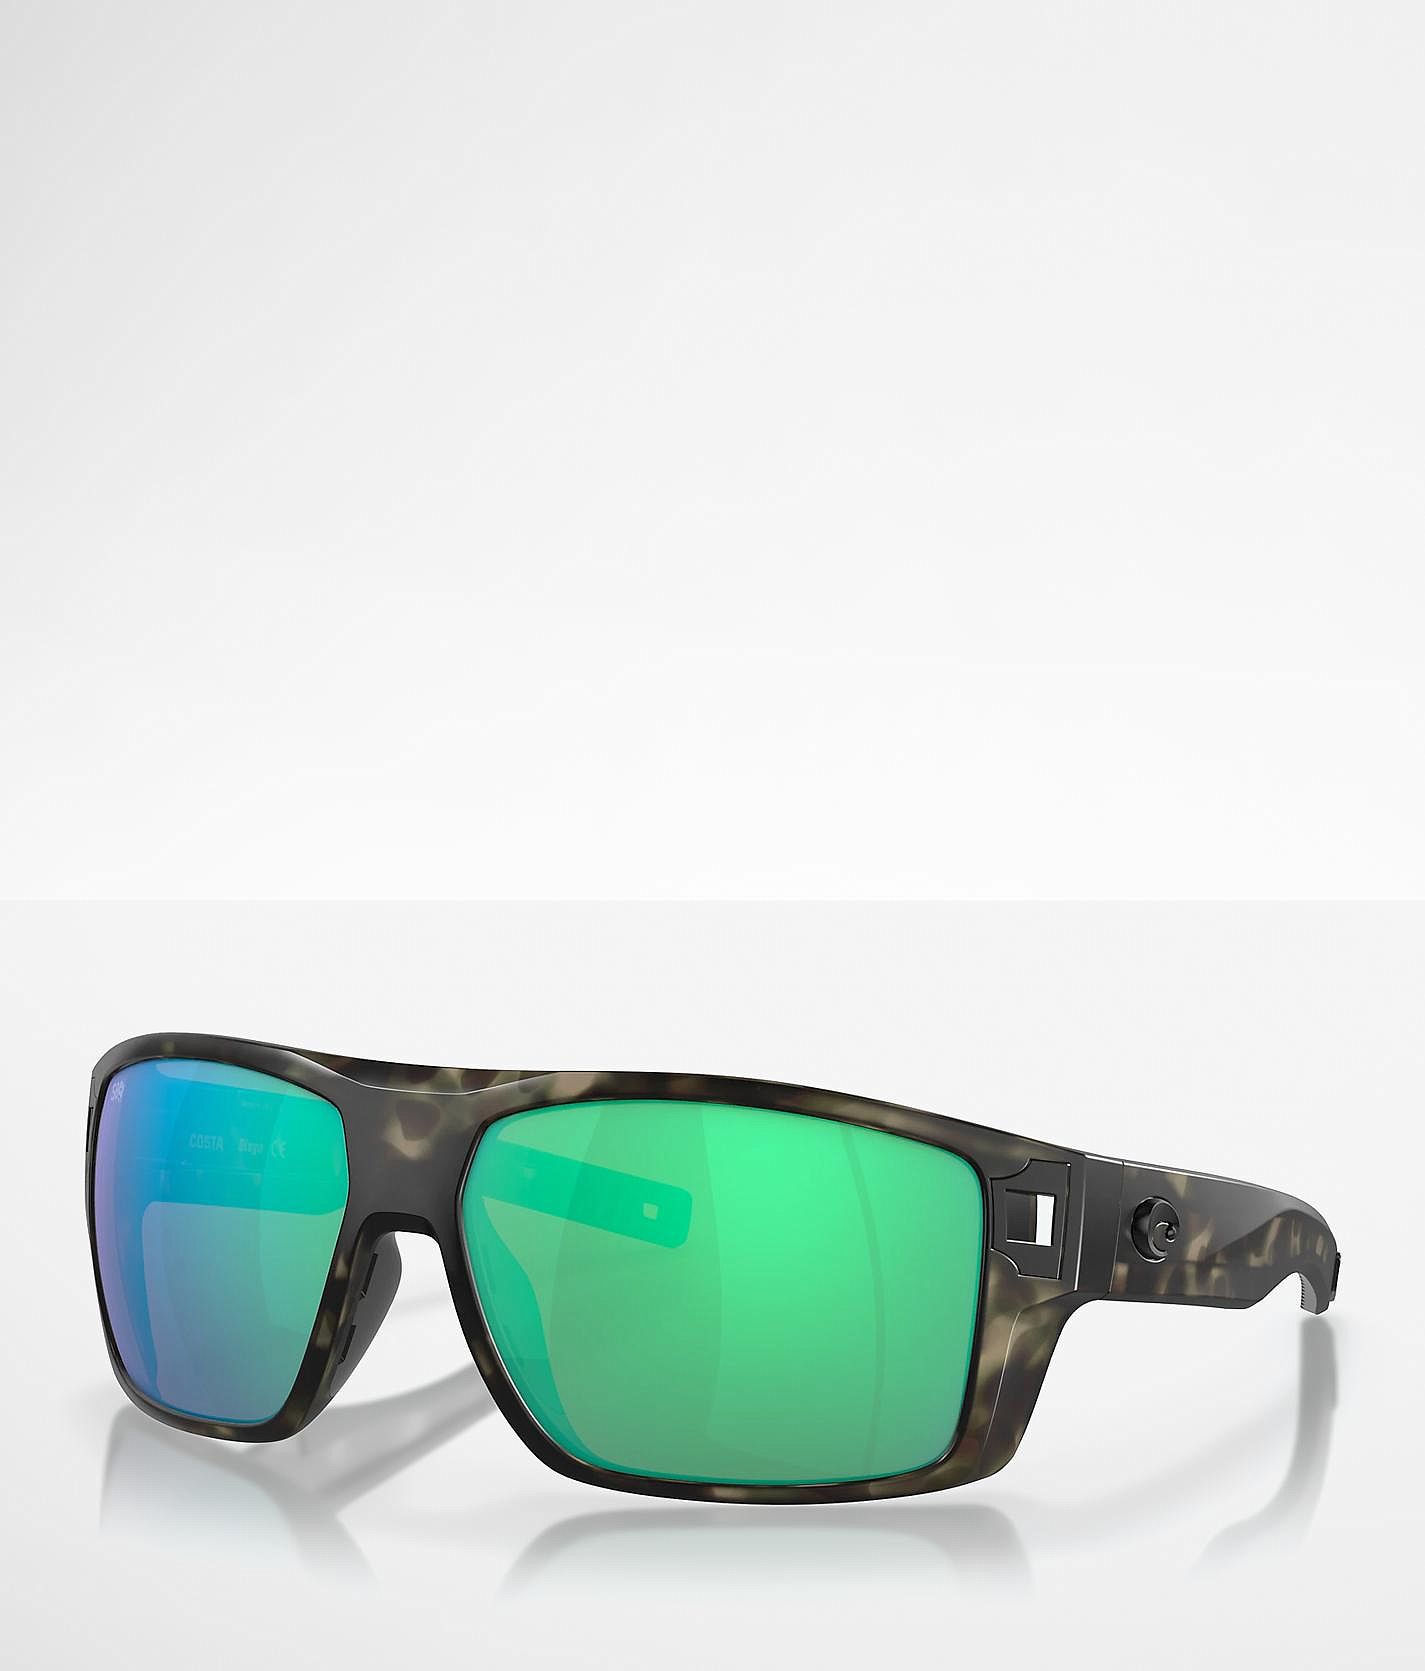 Costa® Diego 580 Polarized Sunglasses - Men's Sunglasses